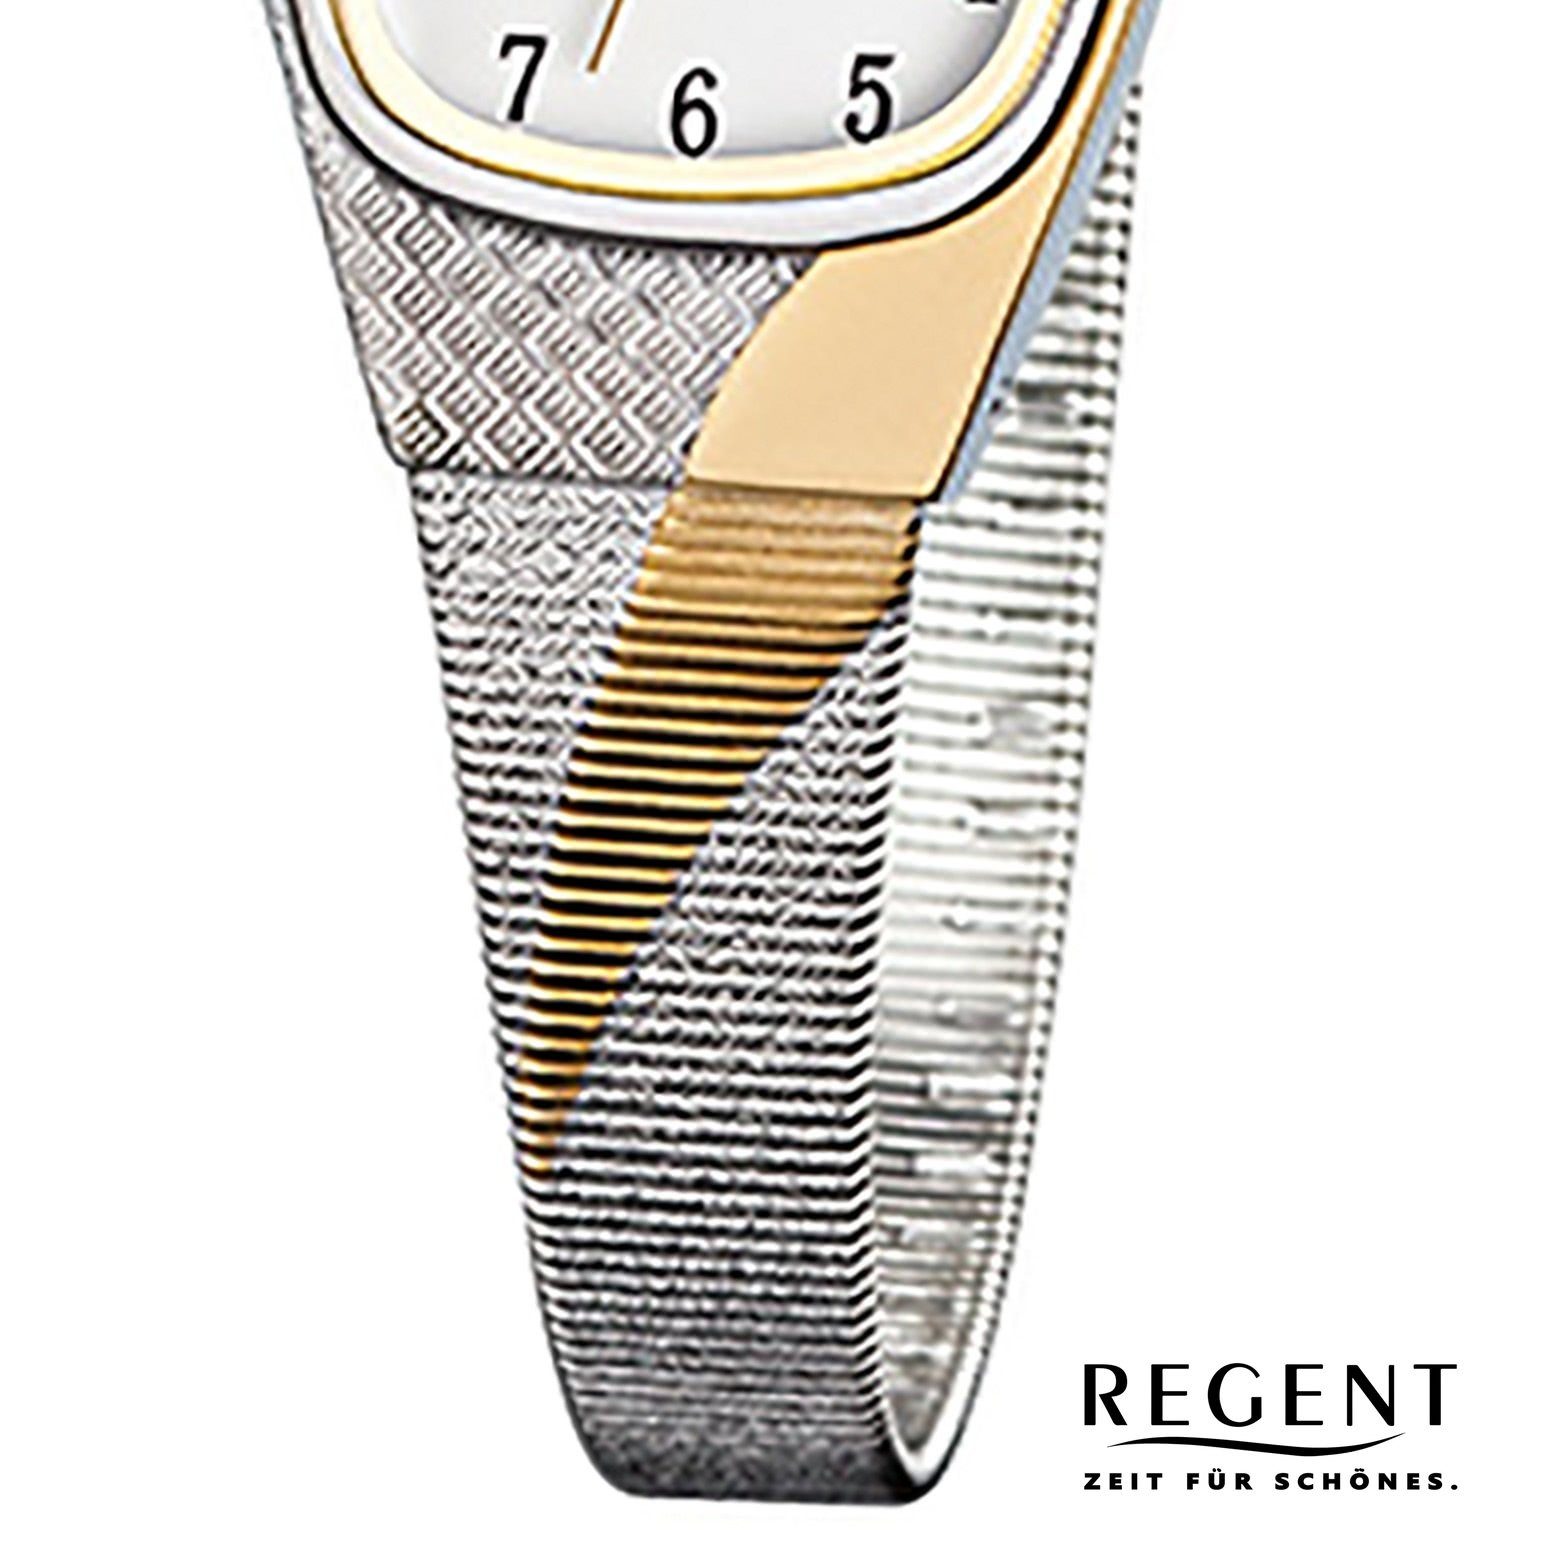 Damen-Armbanduhr Regent Damen eckig, gold Regent 19mm), Edelstahlarmband klein tonneau, (ca. silber Quarzuhr Analog, Armbanduhr